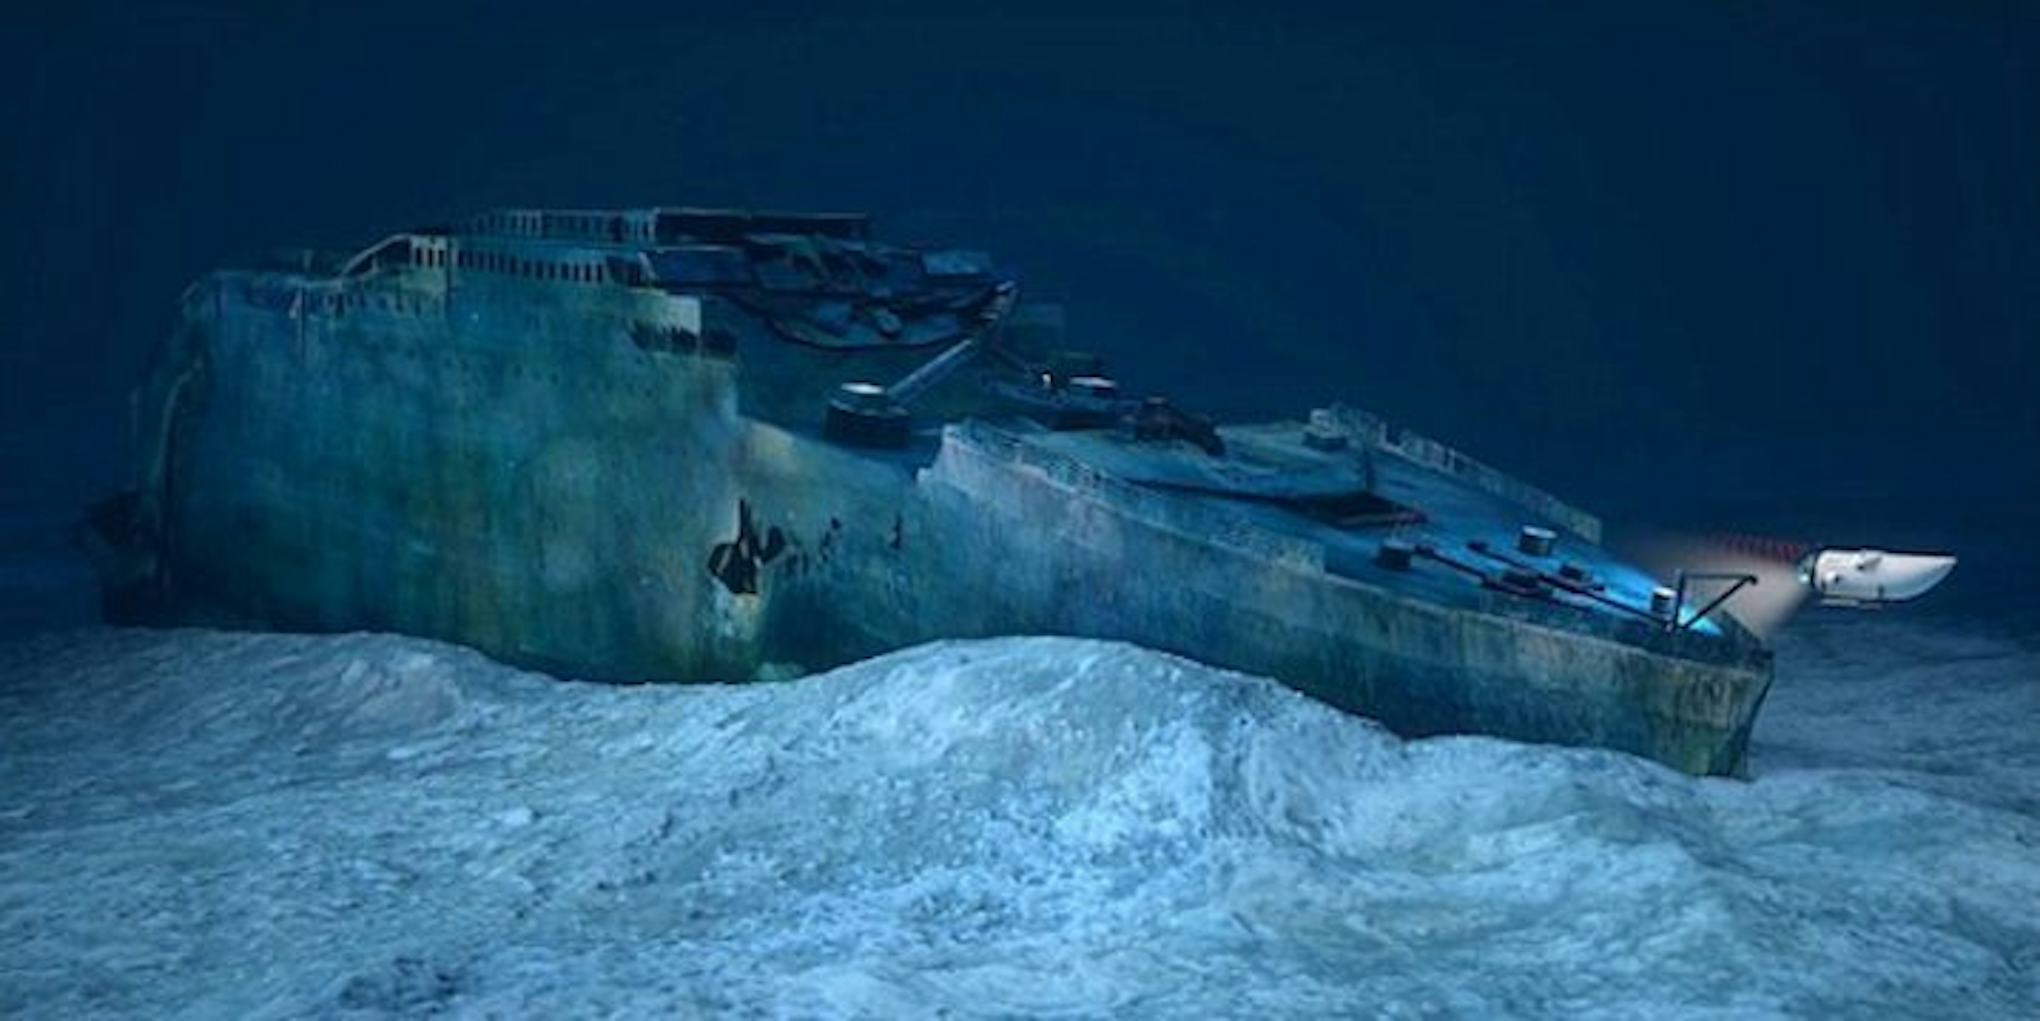 RMS Titanic Shipwreck